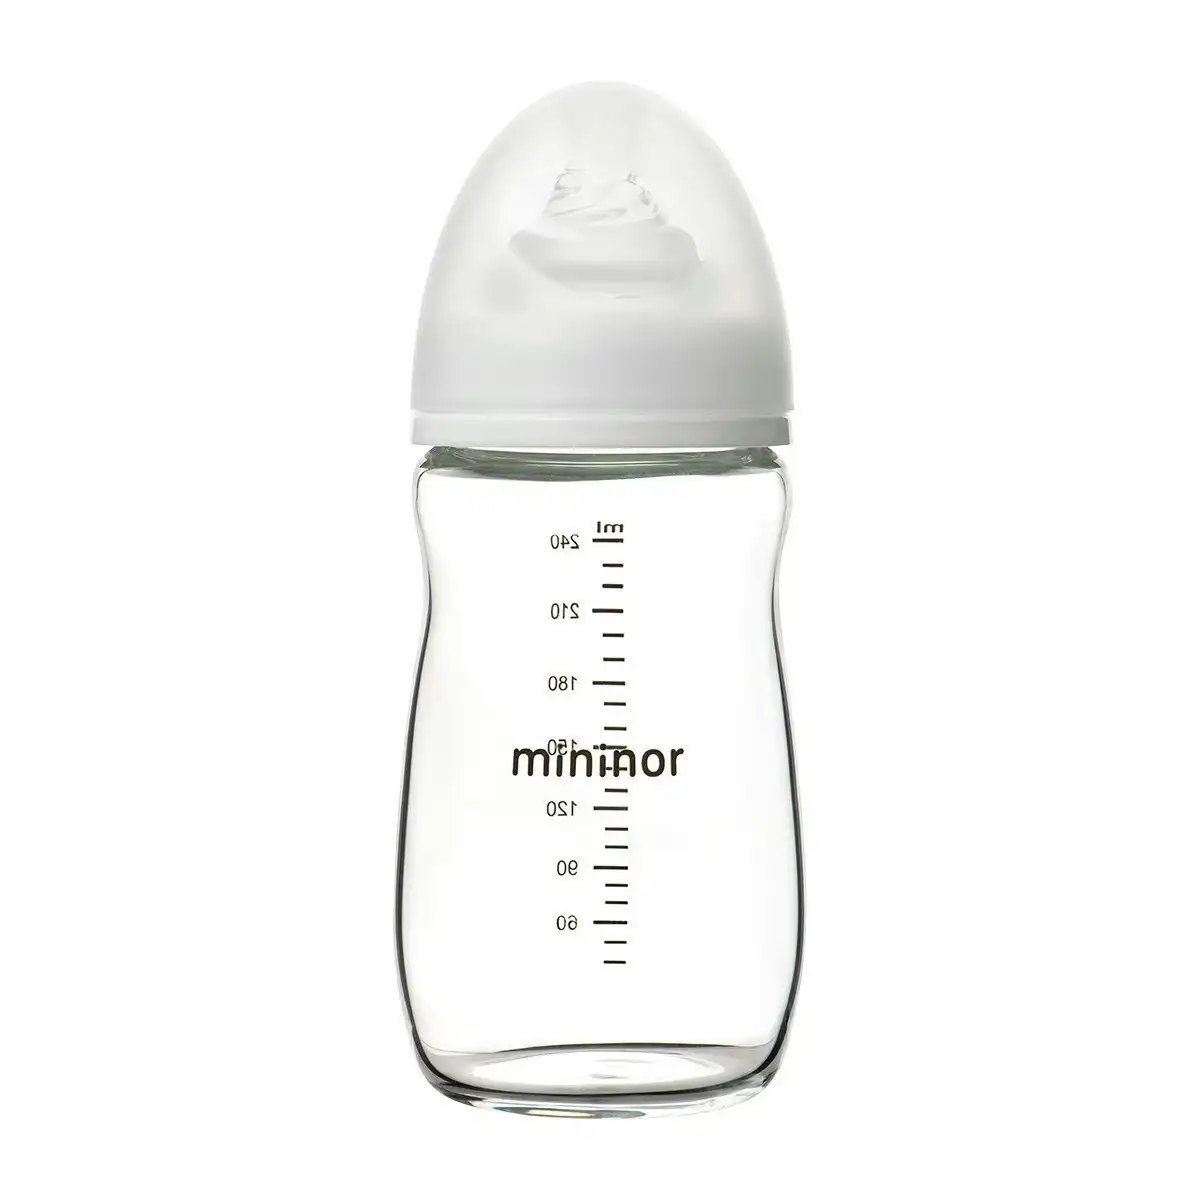 Mininor Baby/Infant 240ml Glass Feeding Bottle w/ Anti-Colic Silicone Teat 0m+